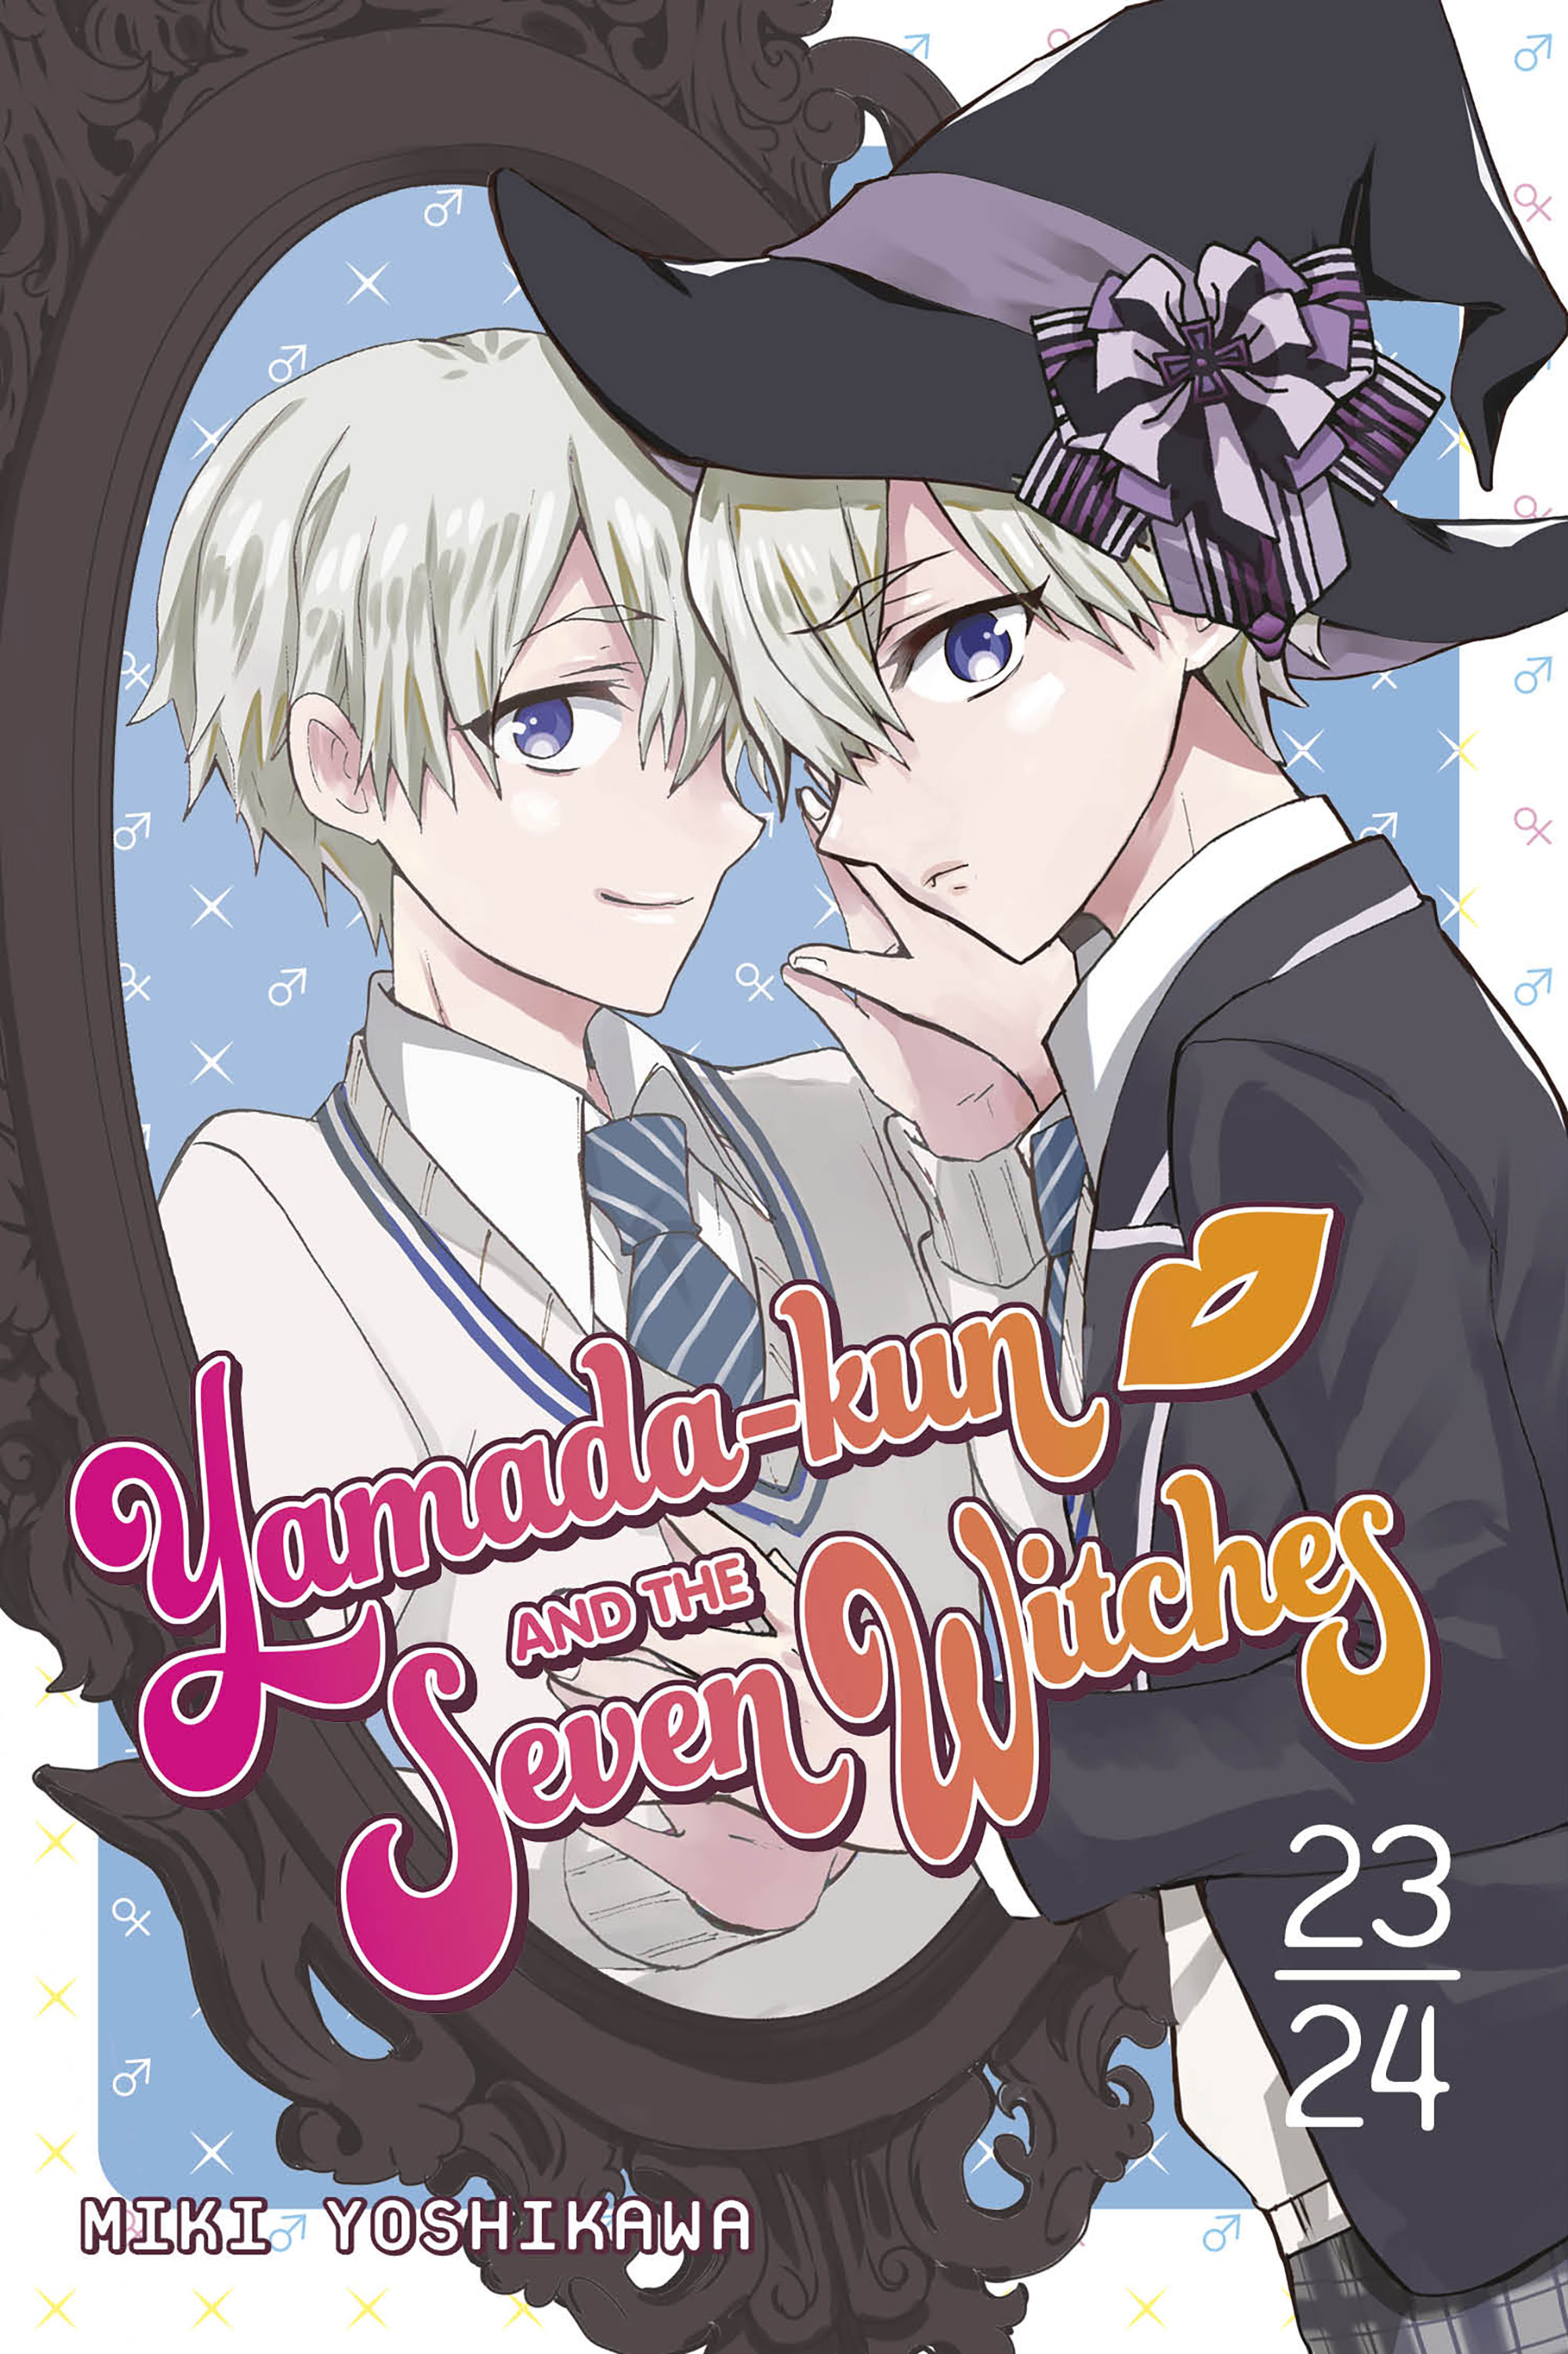 Yamada Kun & Seven Witches Manga Volume 20 Parts 23-24